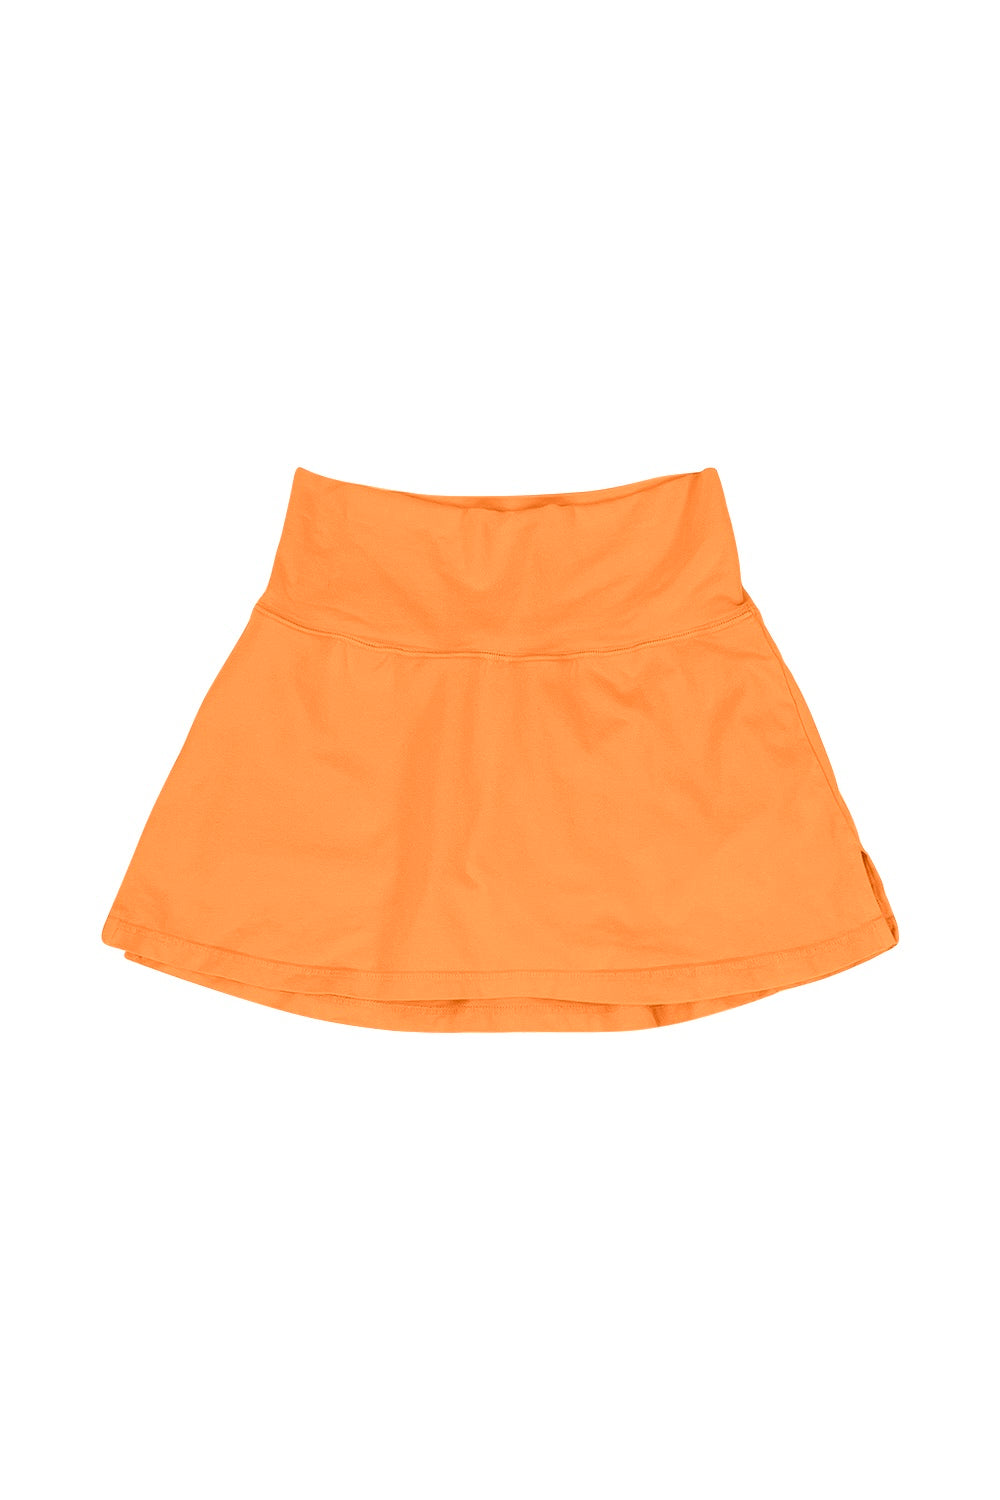 Court Skort | Jungmaven Hemp Clothing & Accessories / Color: Apricot Crush